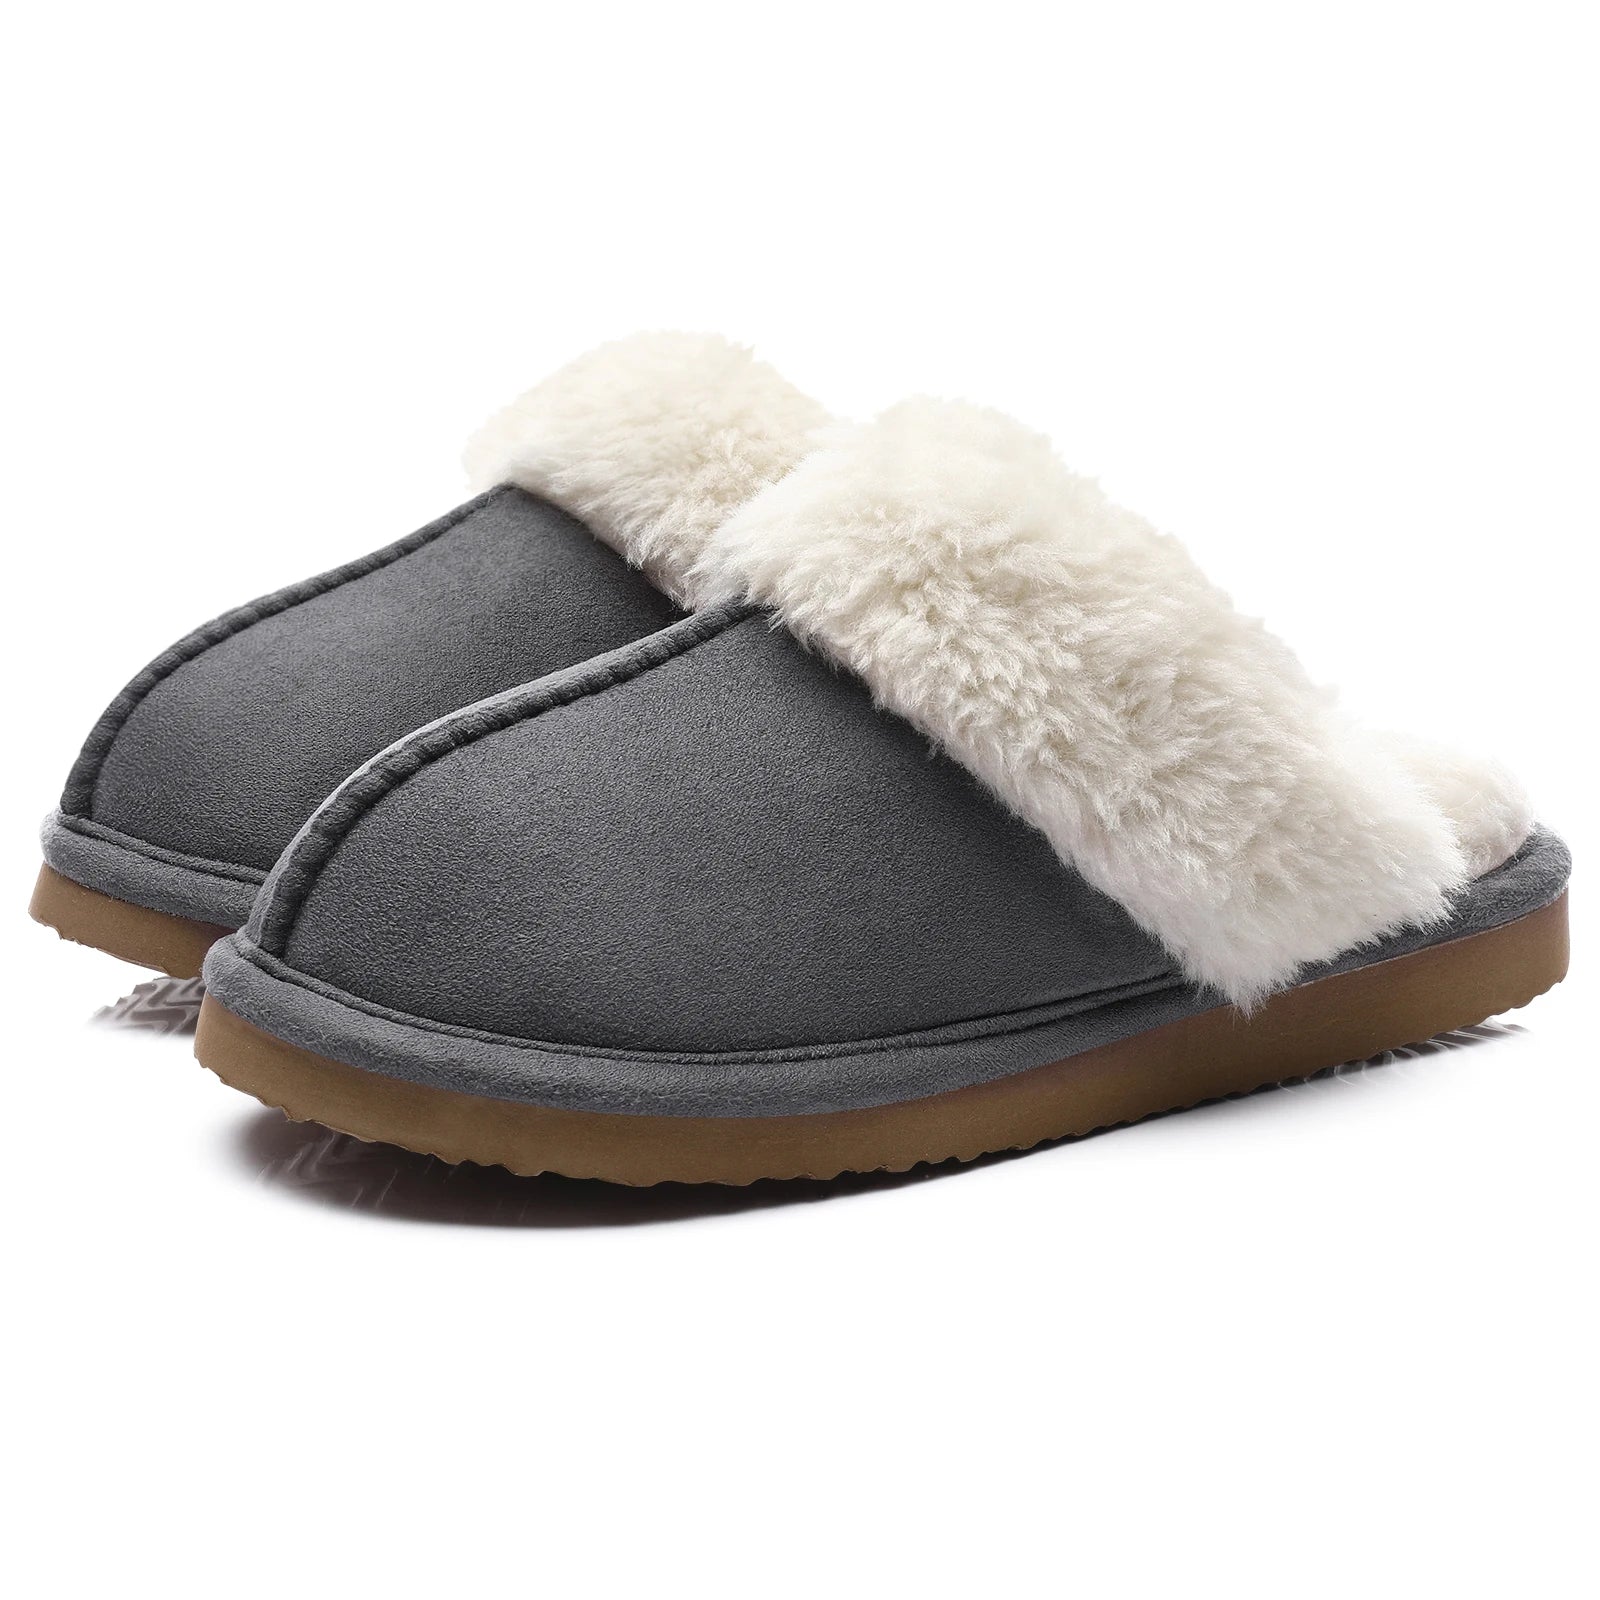 Pallene Winter Fur Slippers Women Men Indoor Warm Cozy Fuzzy Flats Slides Warm Home Short Plush Slippers Suede Mules